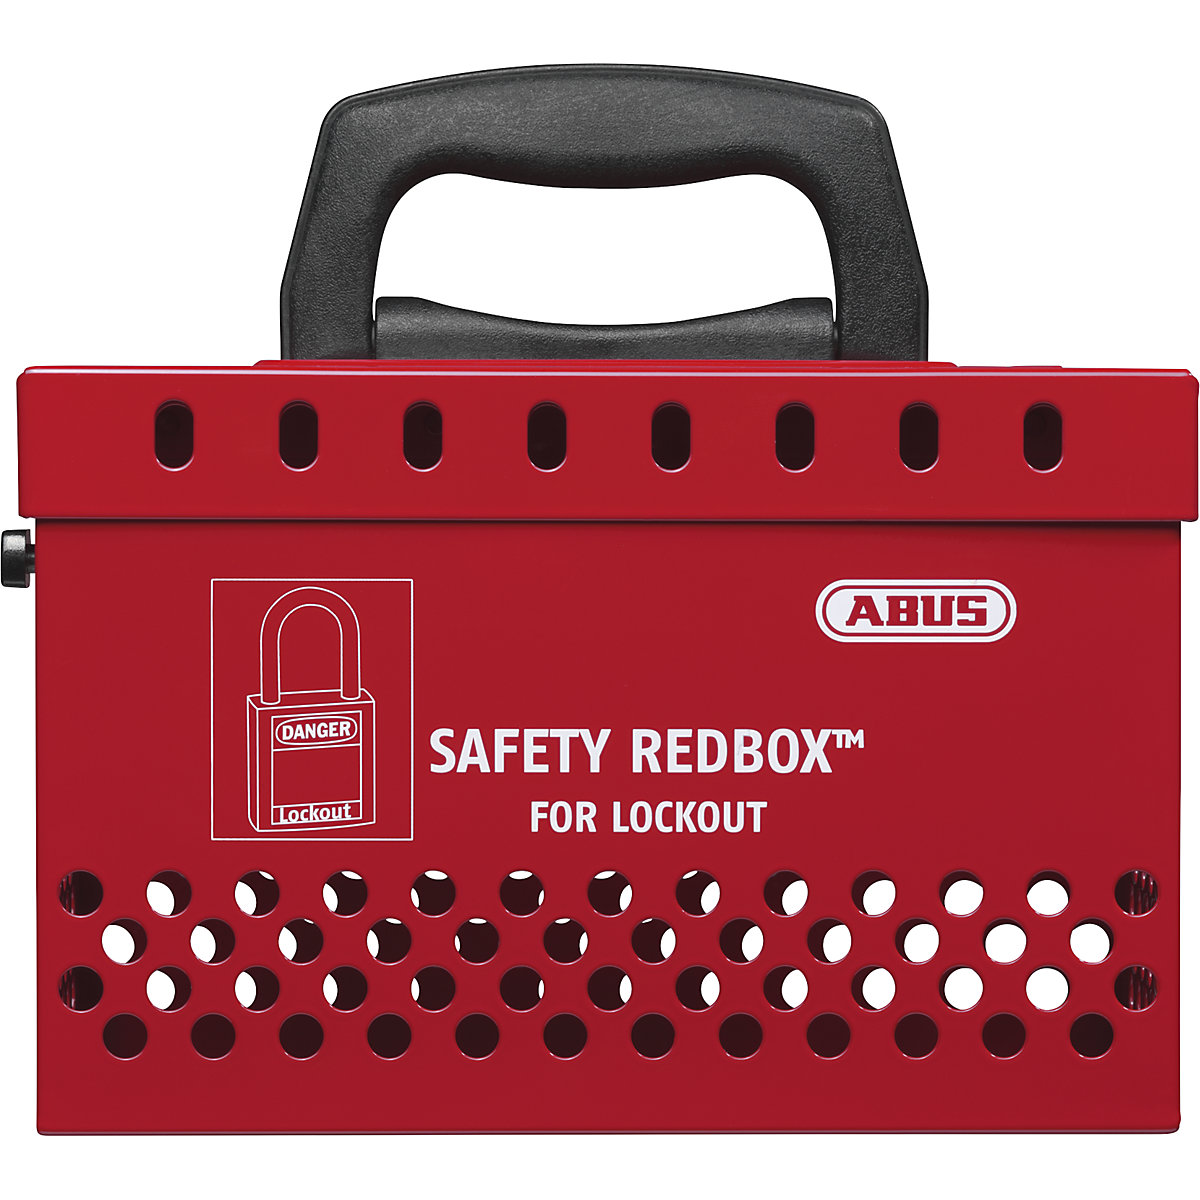 B835 biztonsági redbox doboz - ABUS